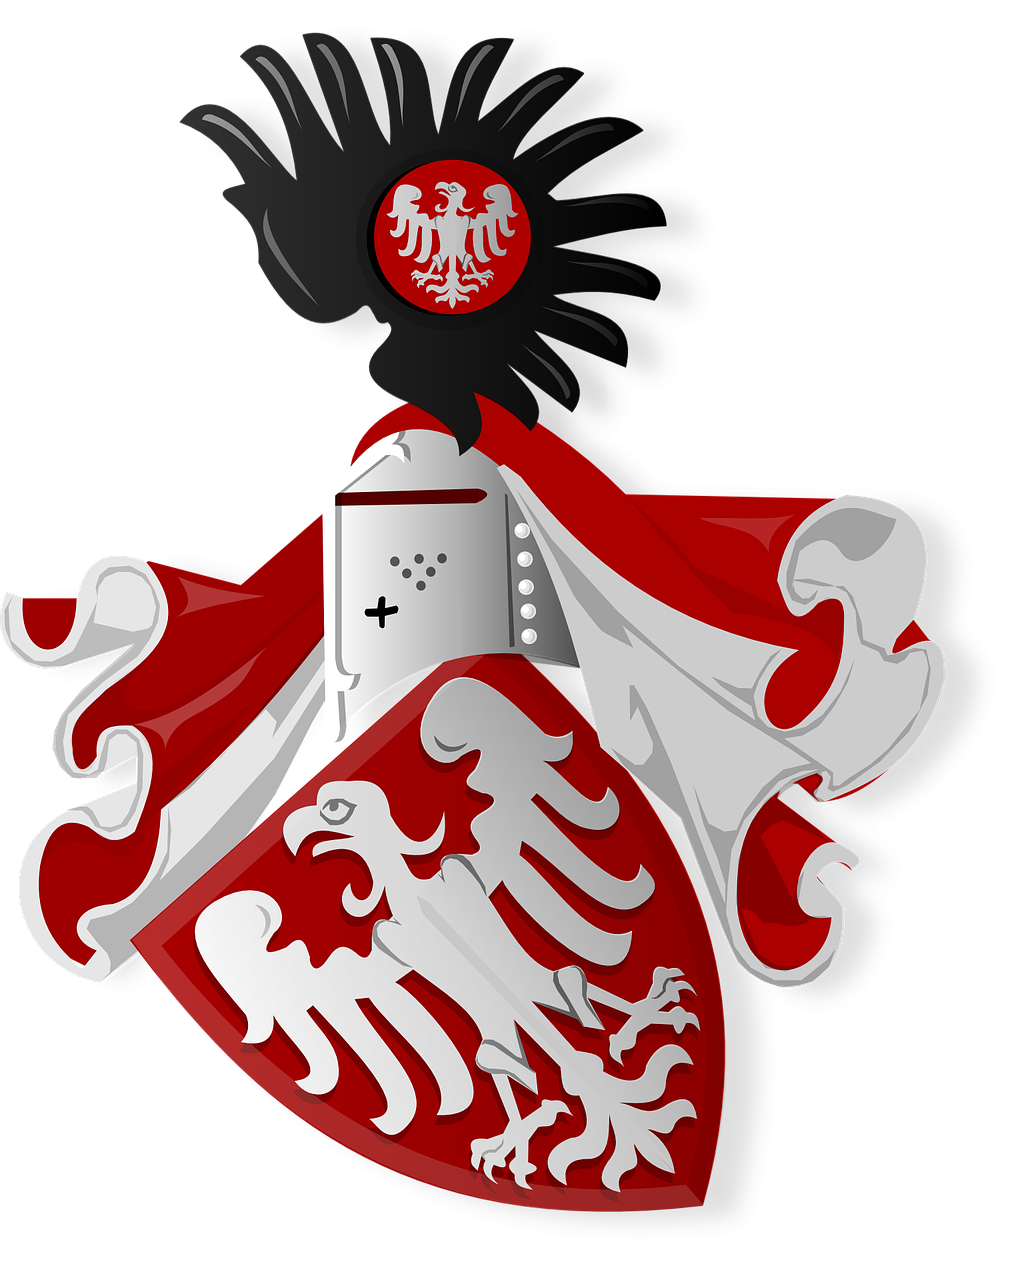 arnsberg coat of arms heraldry free photo